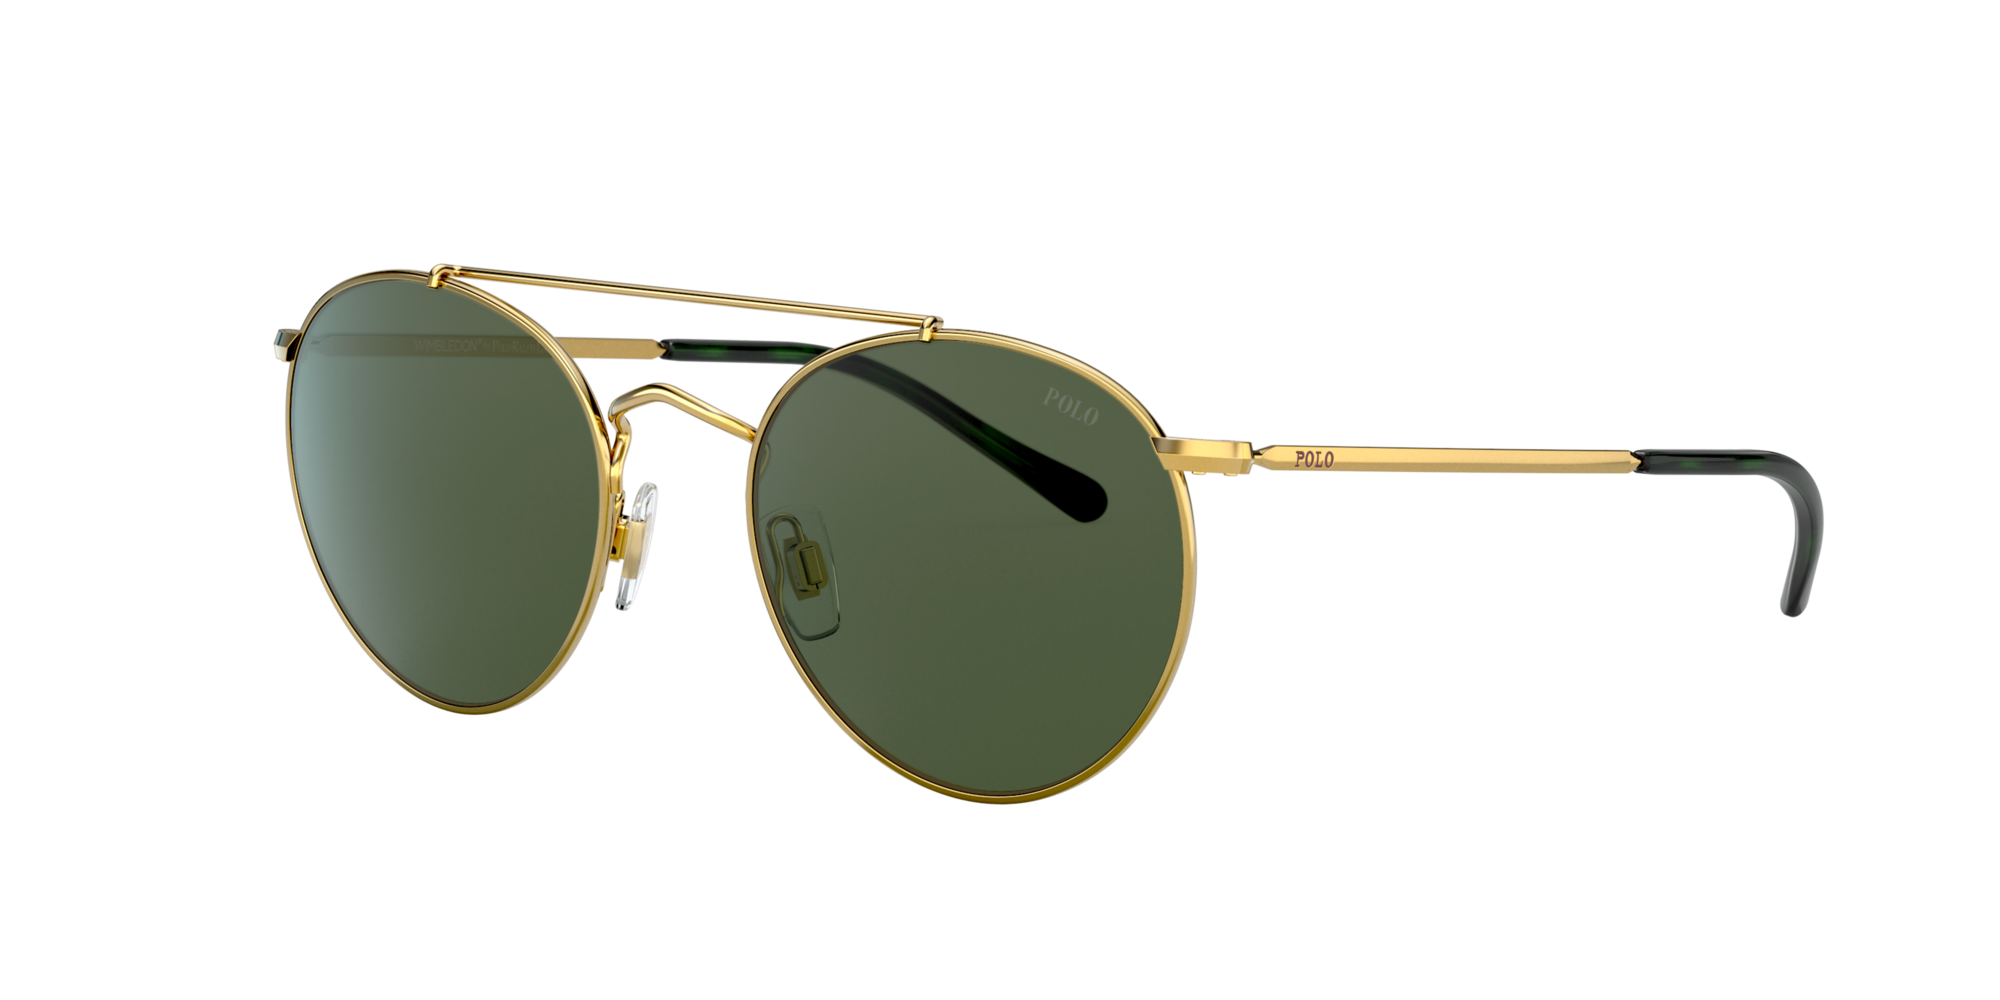 Polo Ralph Lauren PH3114 51 Bottle Green & Shiny Gold Sunglasses 